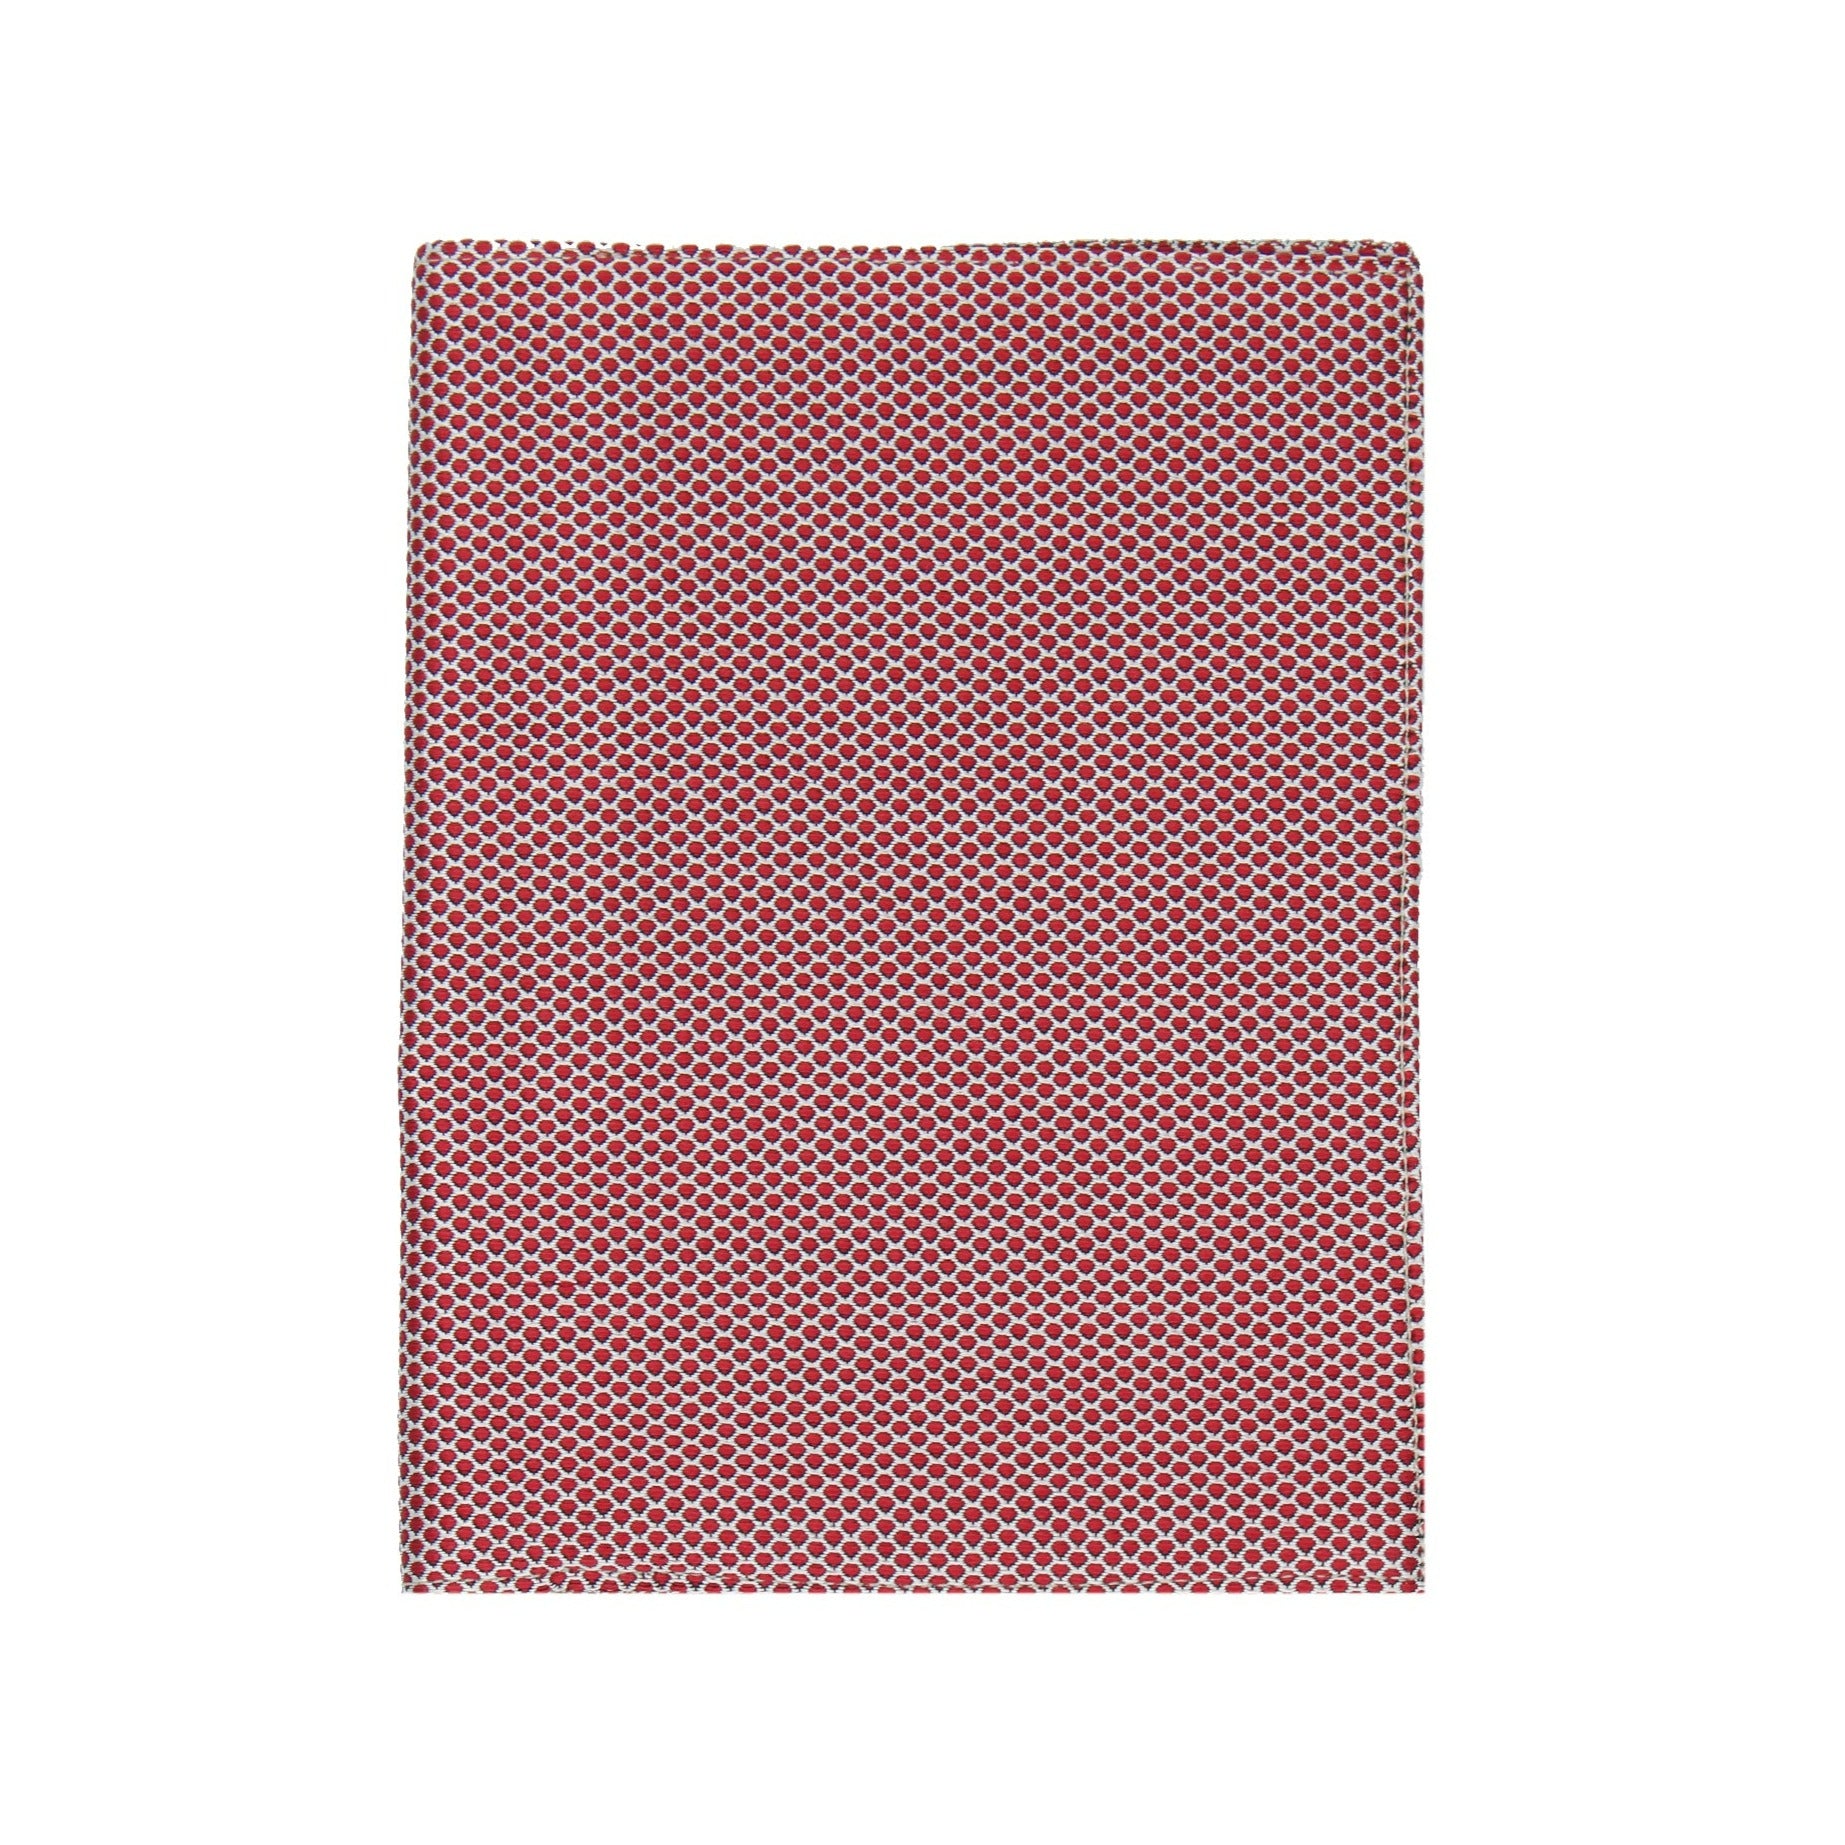 Silk document holder dark and light red pattern